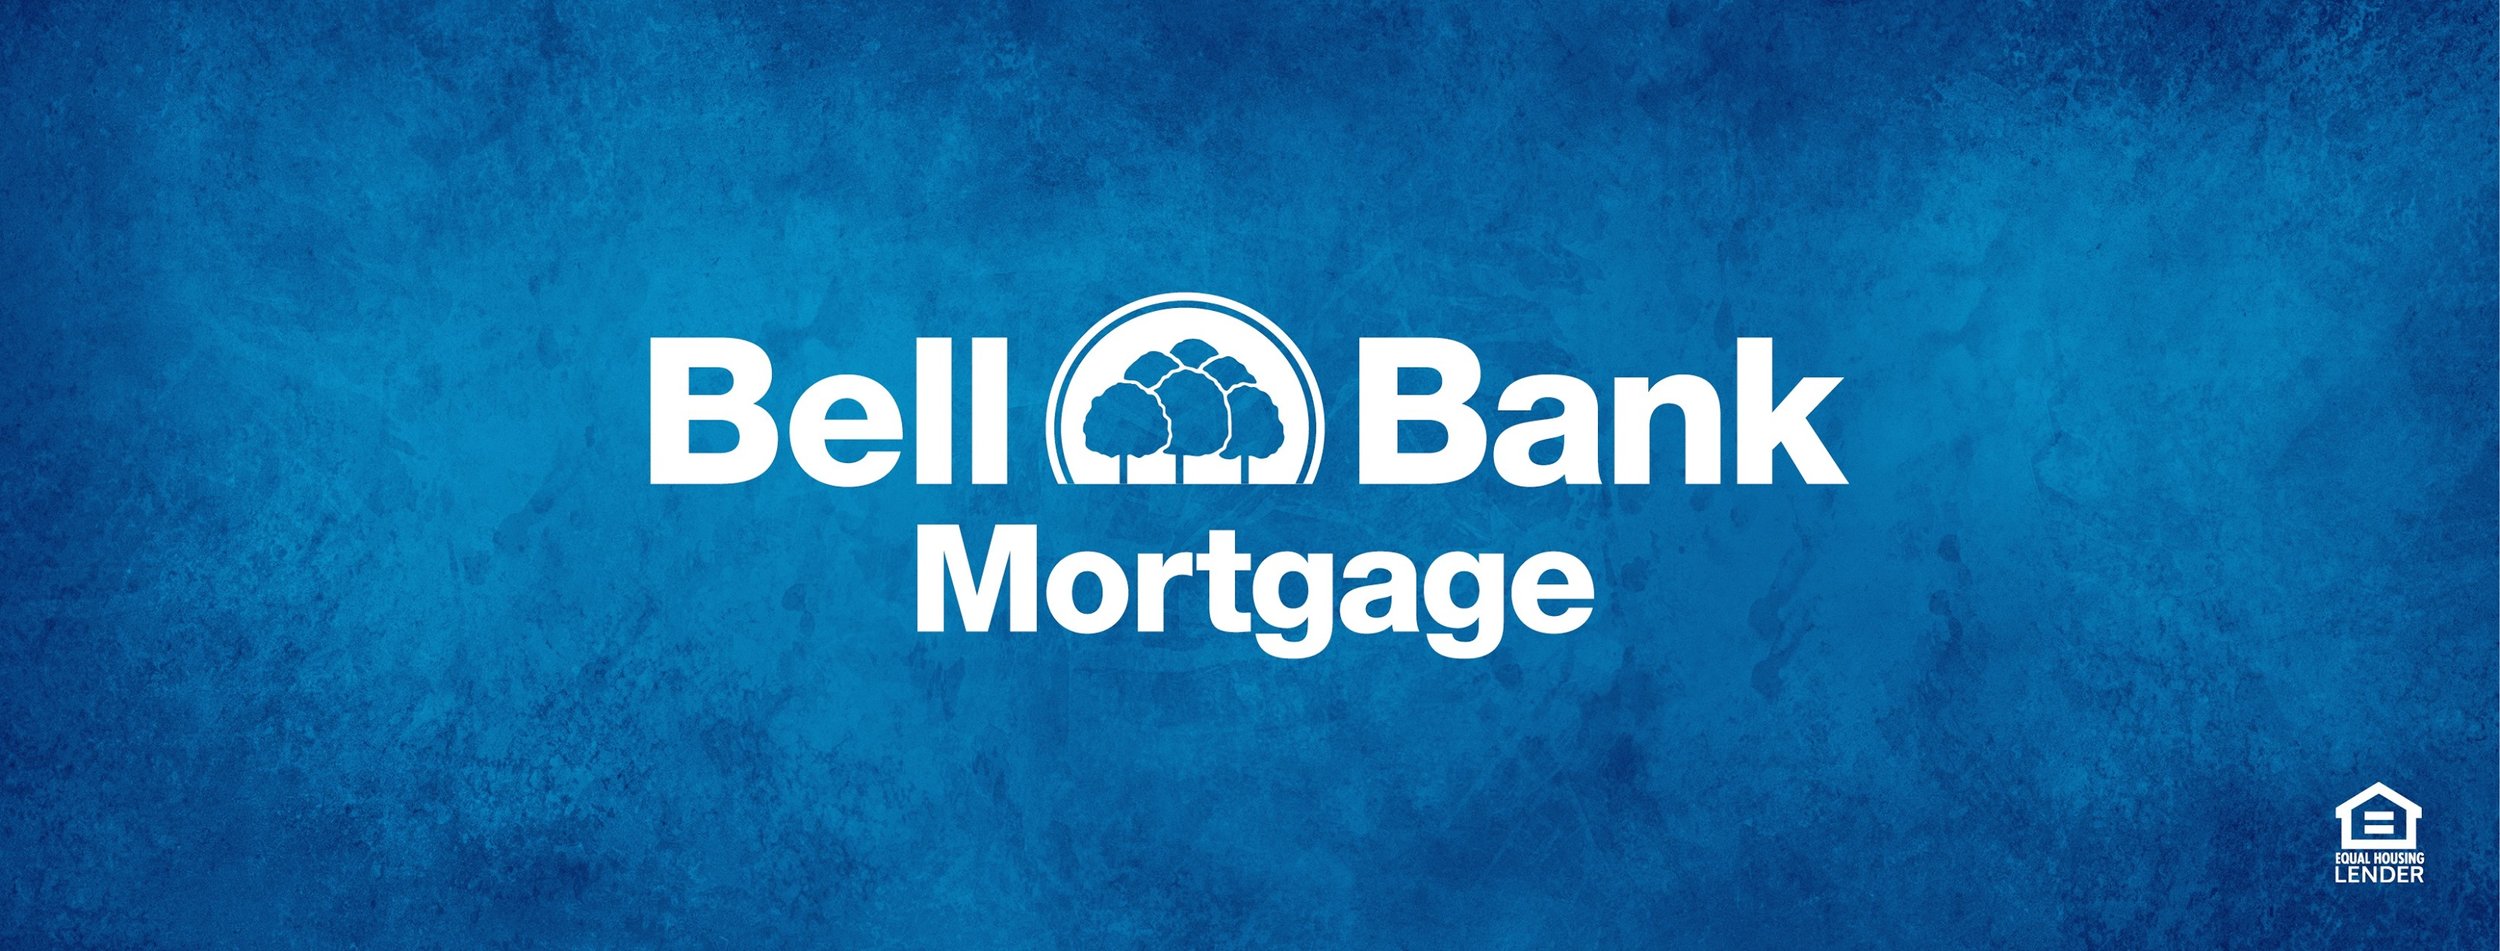 Bell Mortgage Logo.jpg